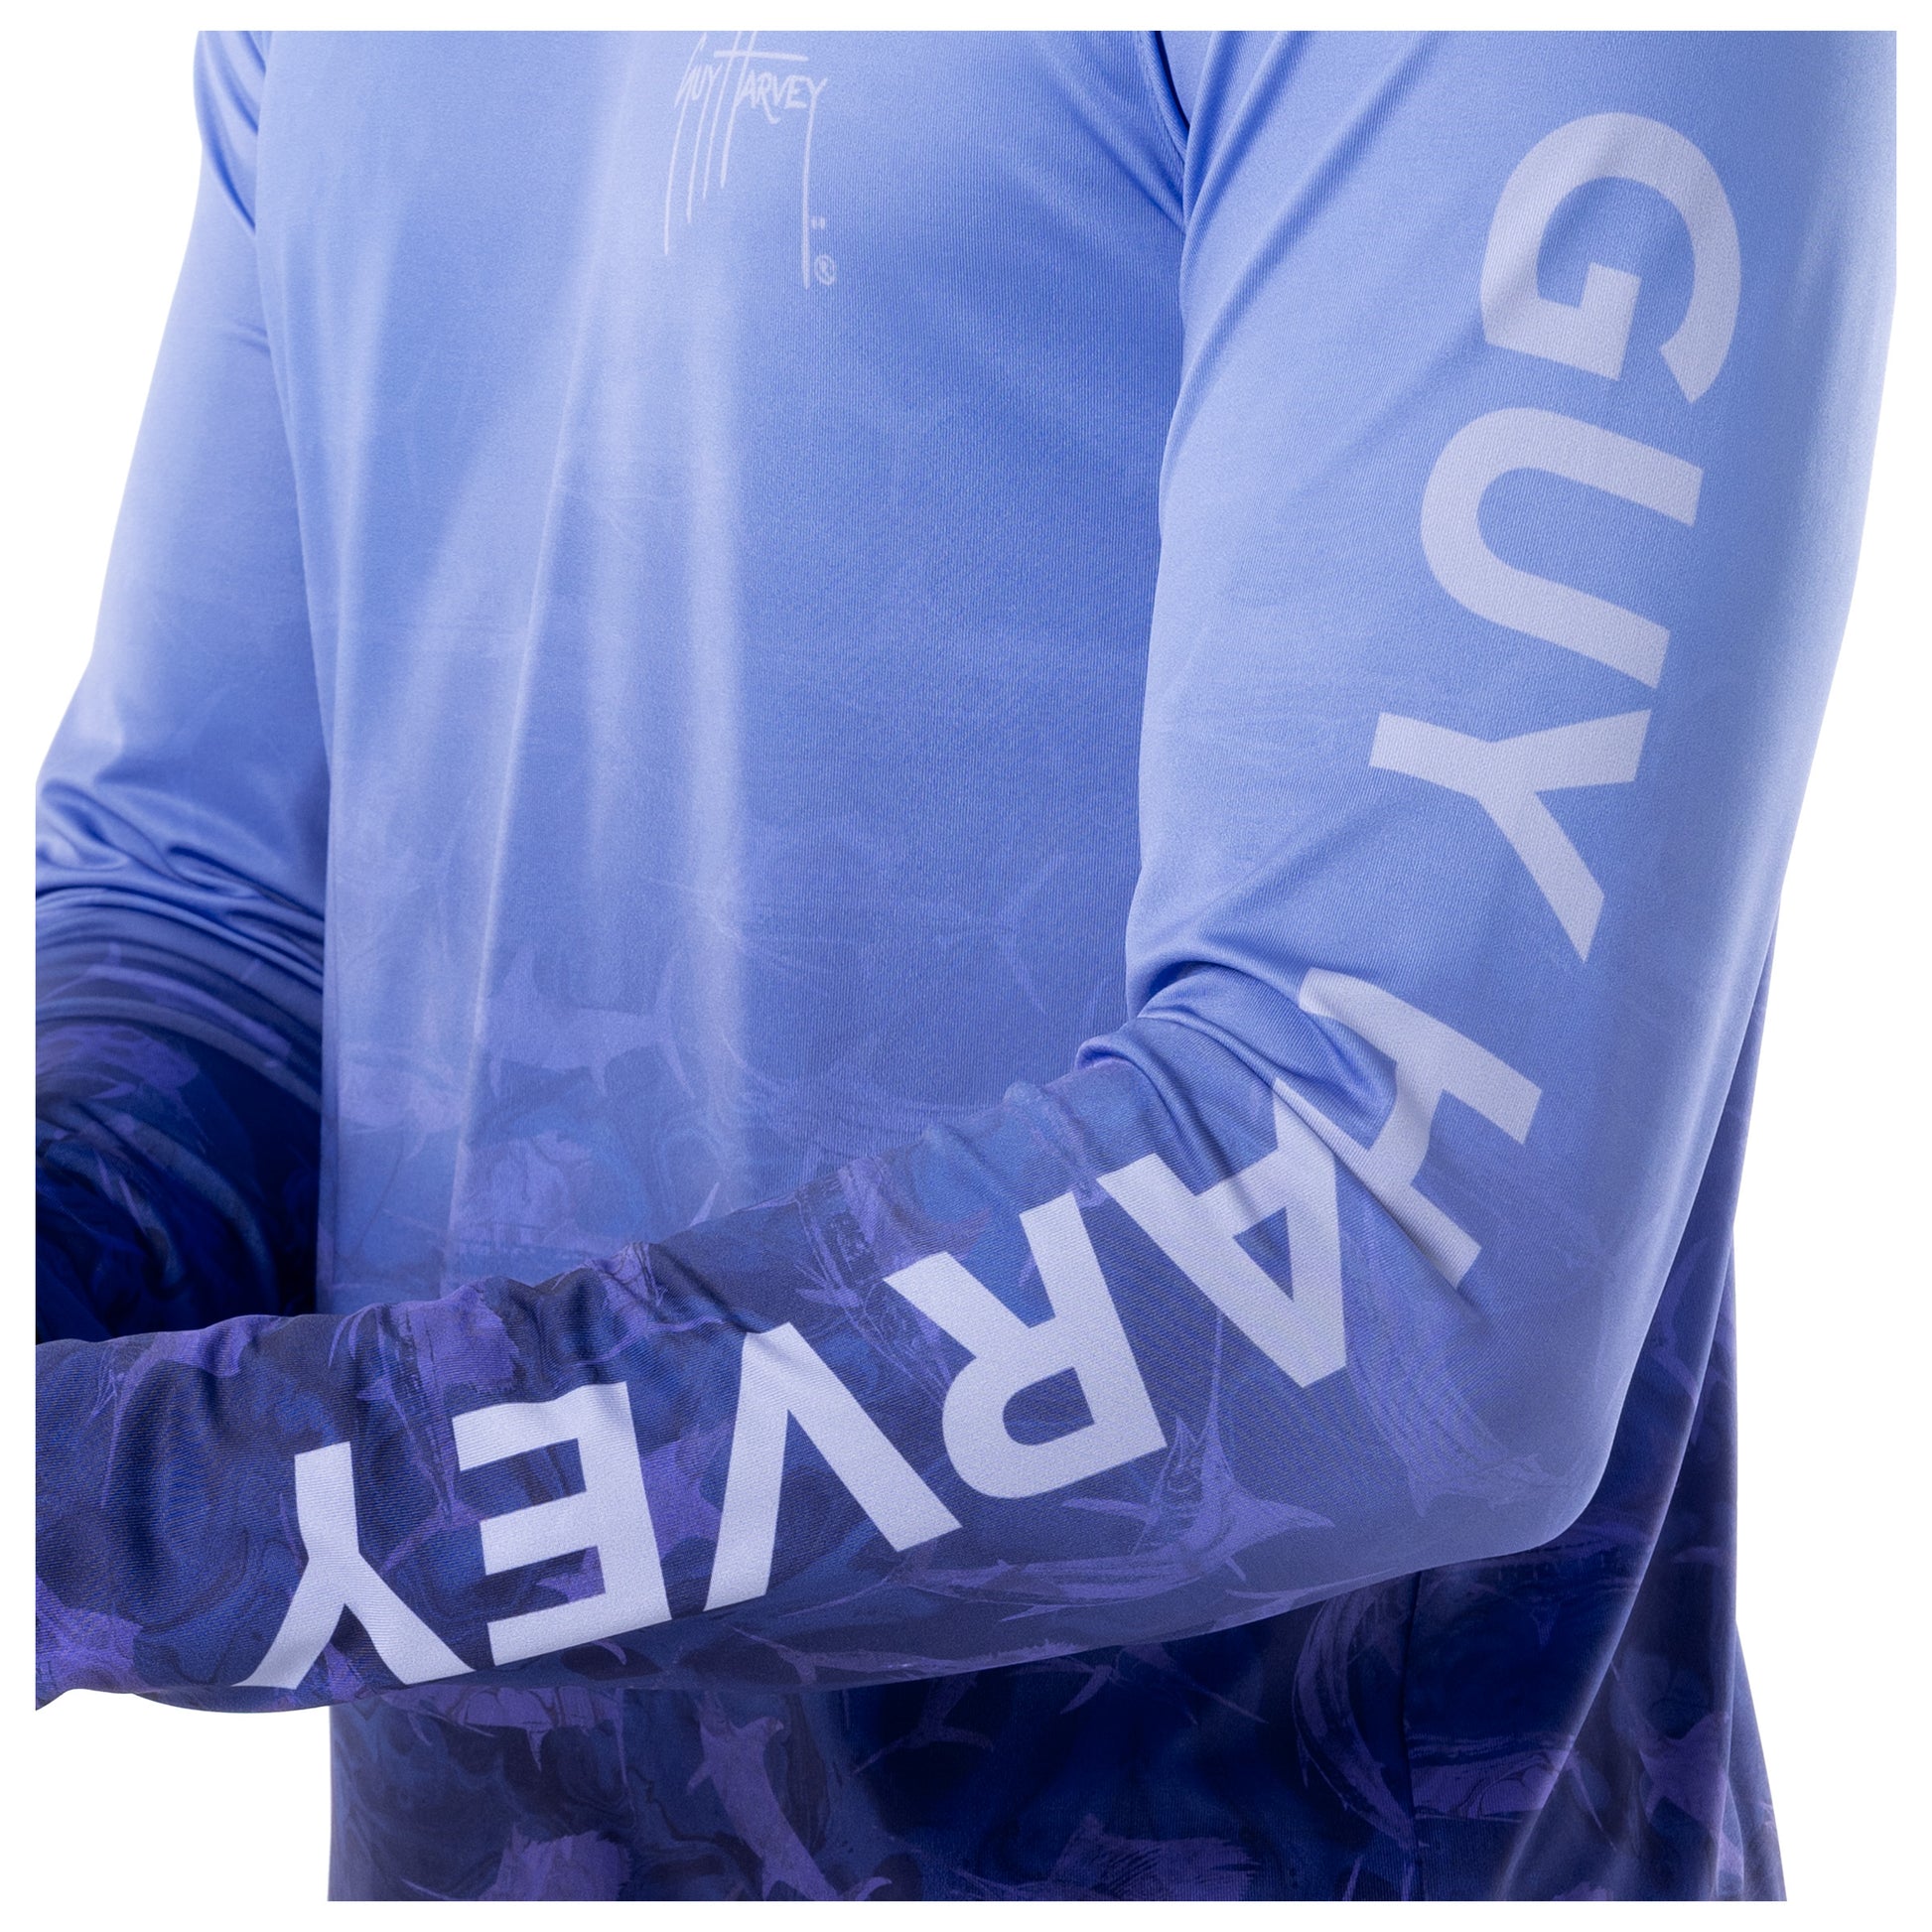 Huk Performance Navy Blue Long Sleeve Fishing Shirt Size XL Mens